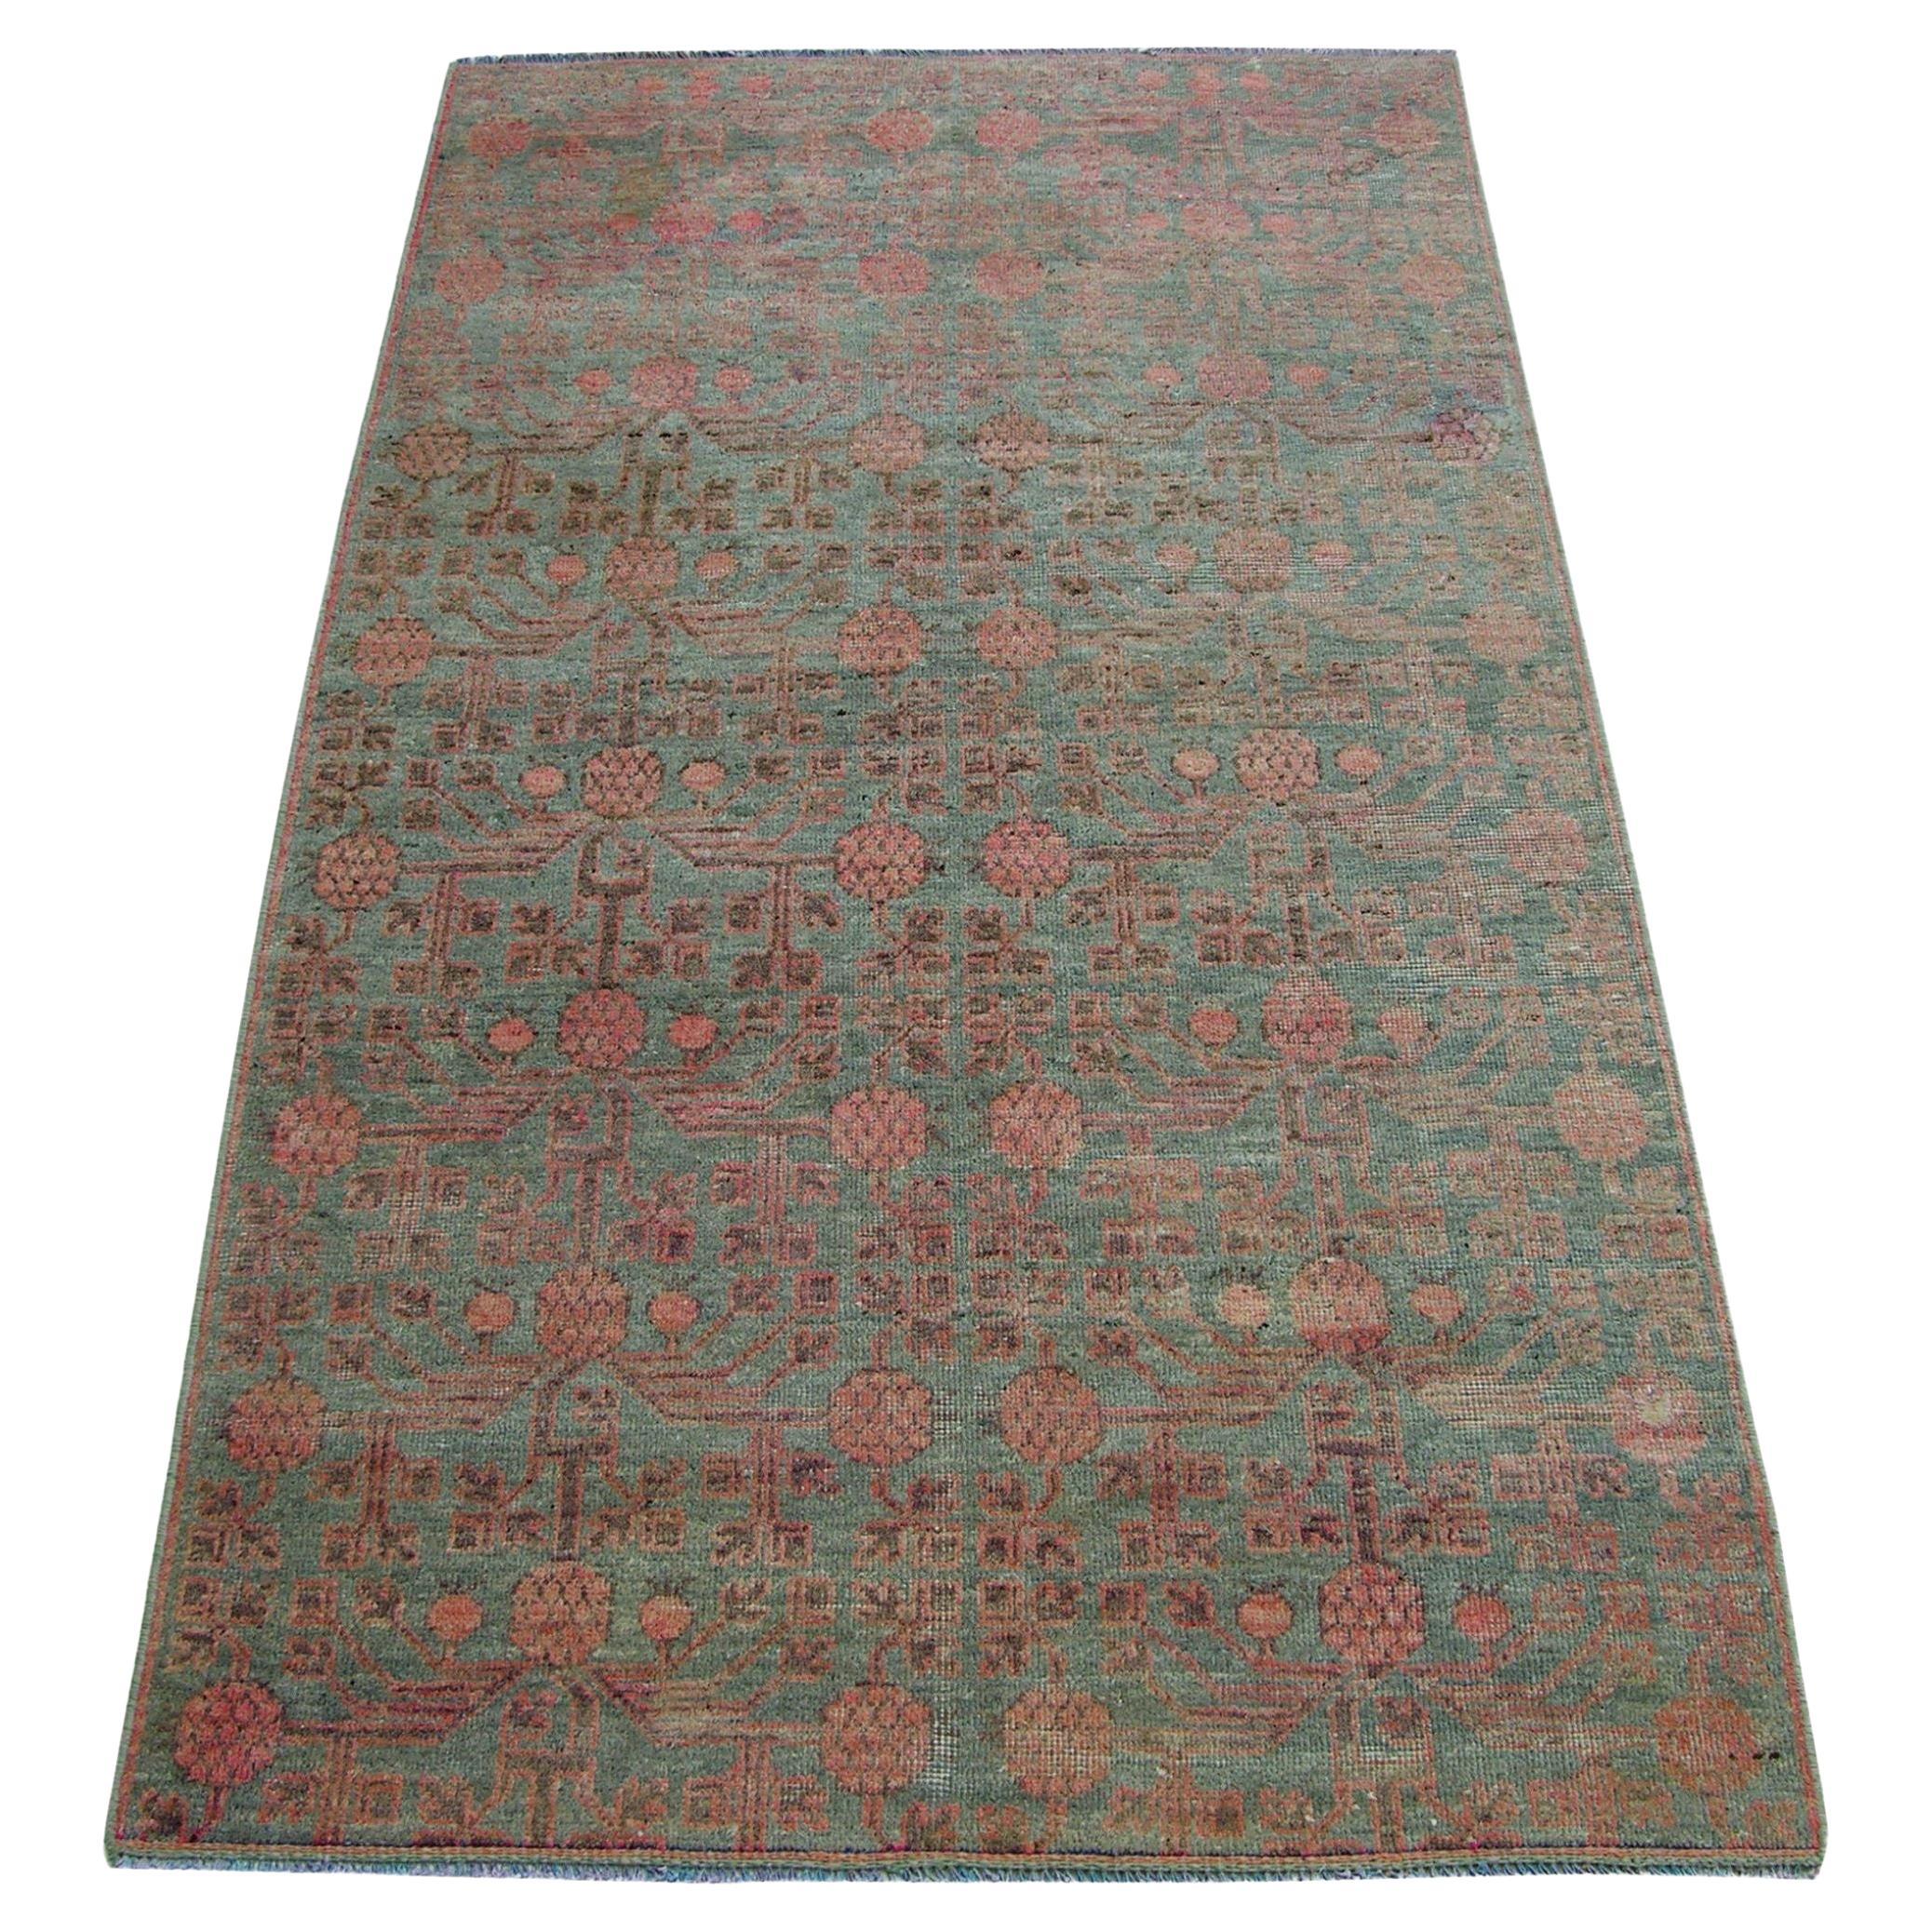 Antique Abstract Design Khotan Samarkand Rug